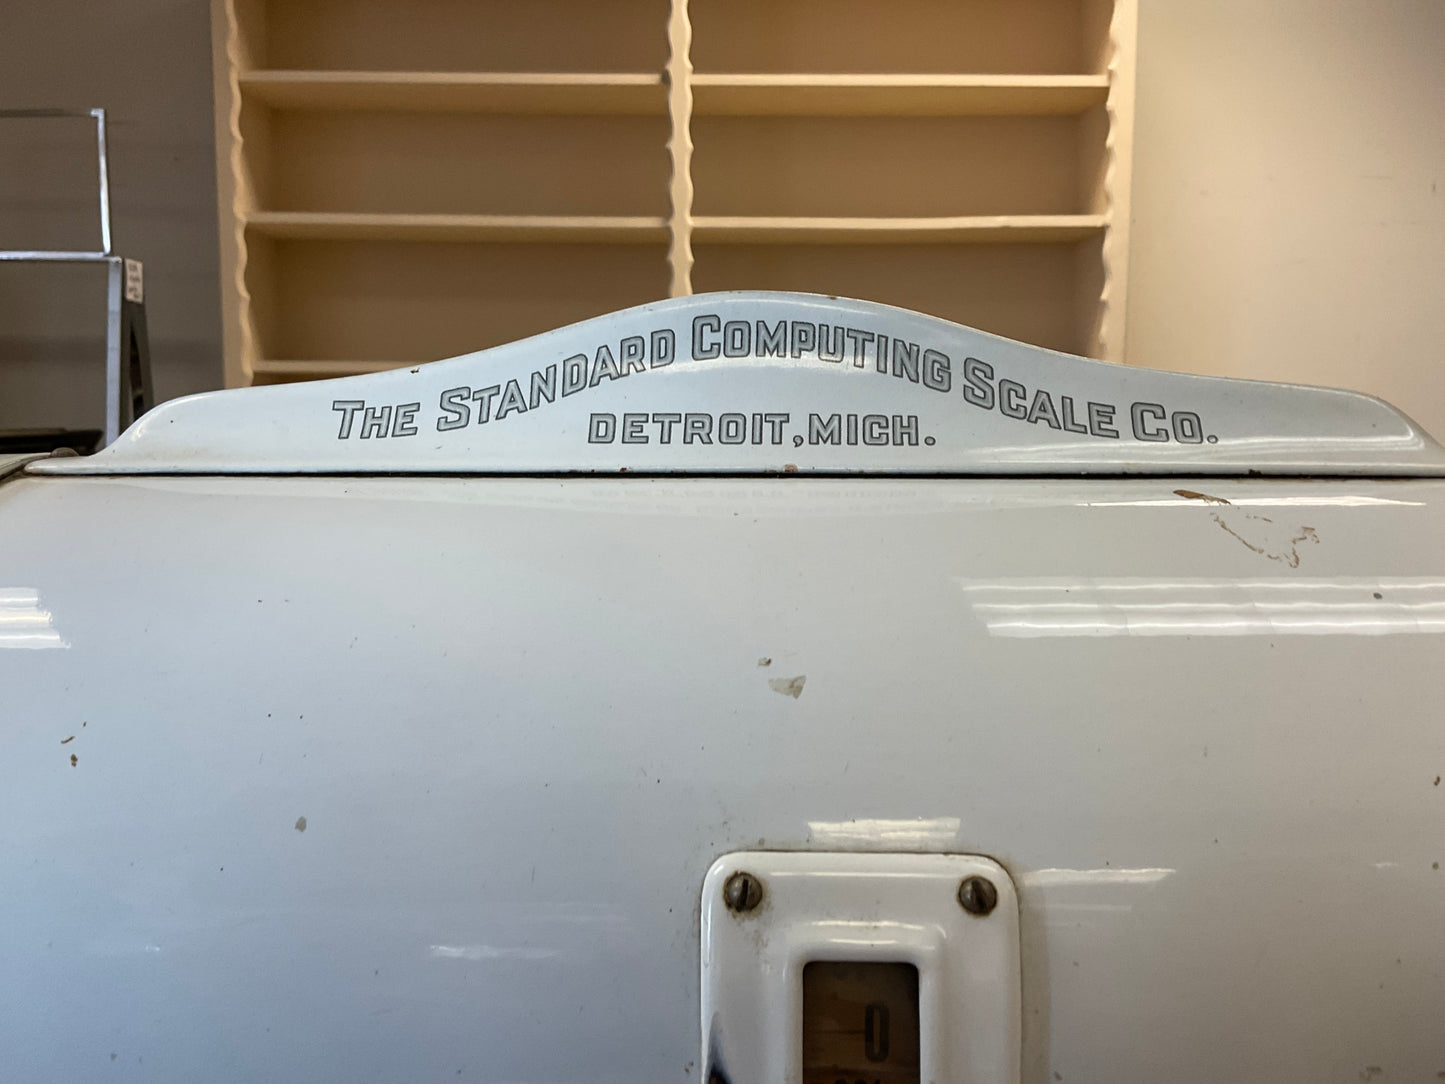 Antique Deli Scale By The Standard Computing Scale Co., White